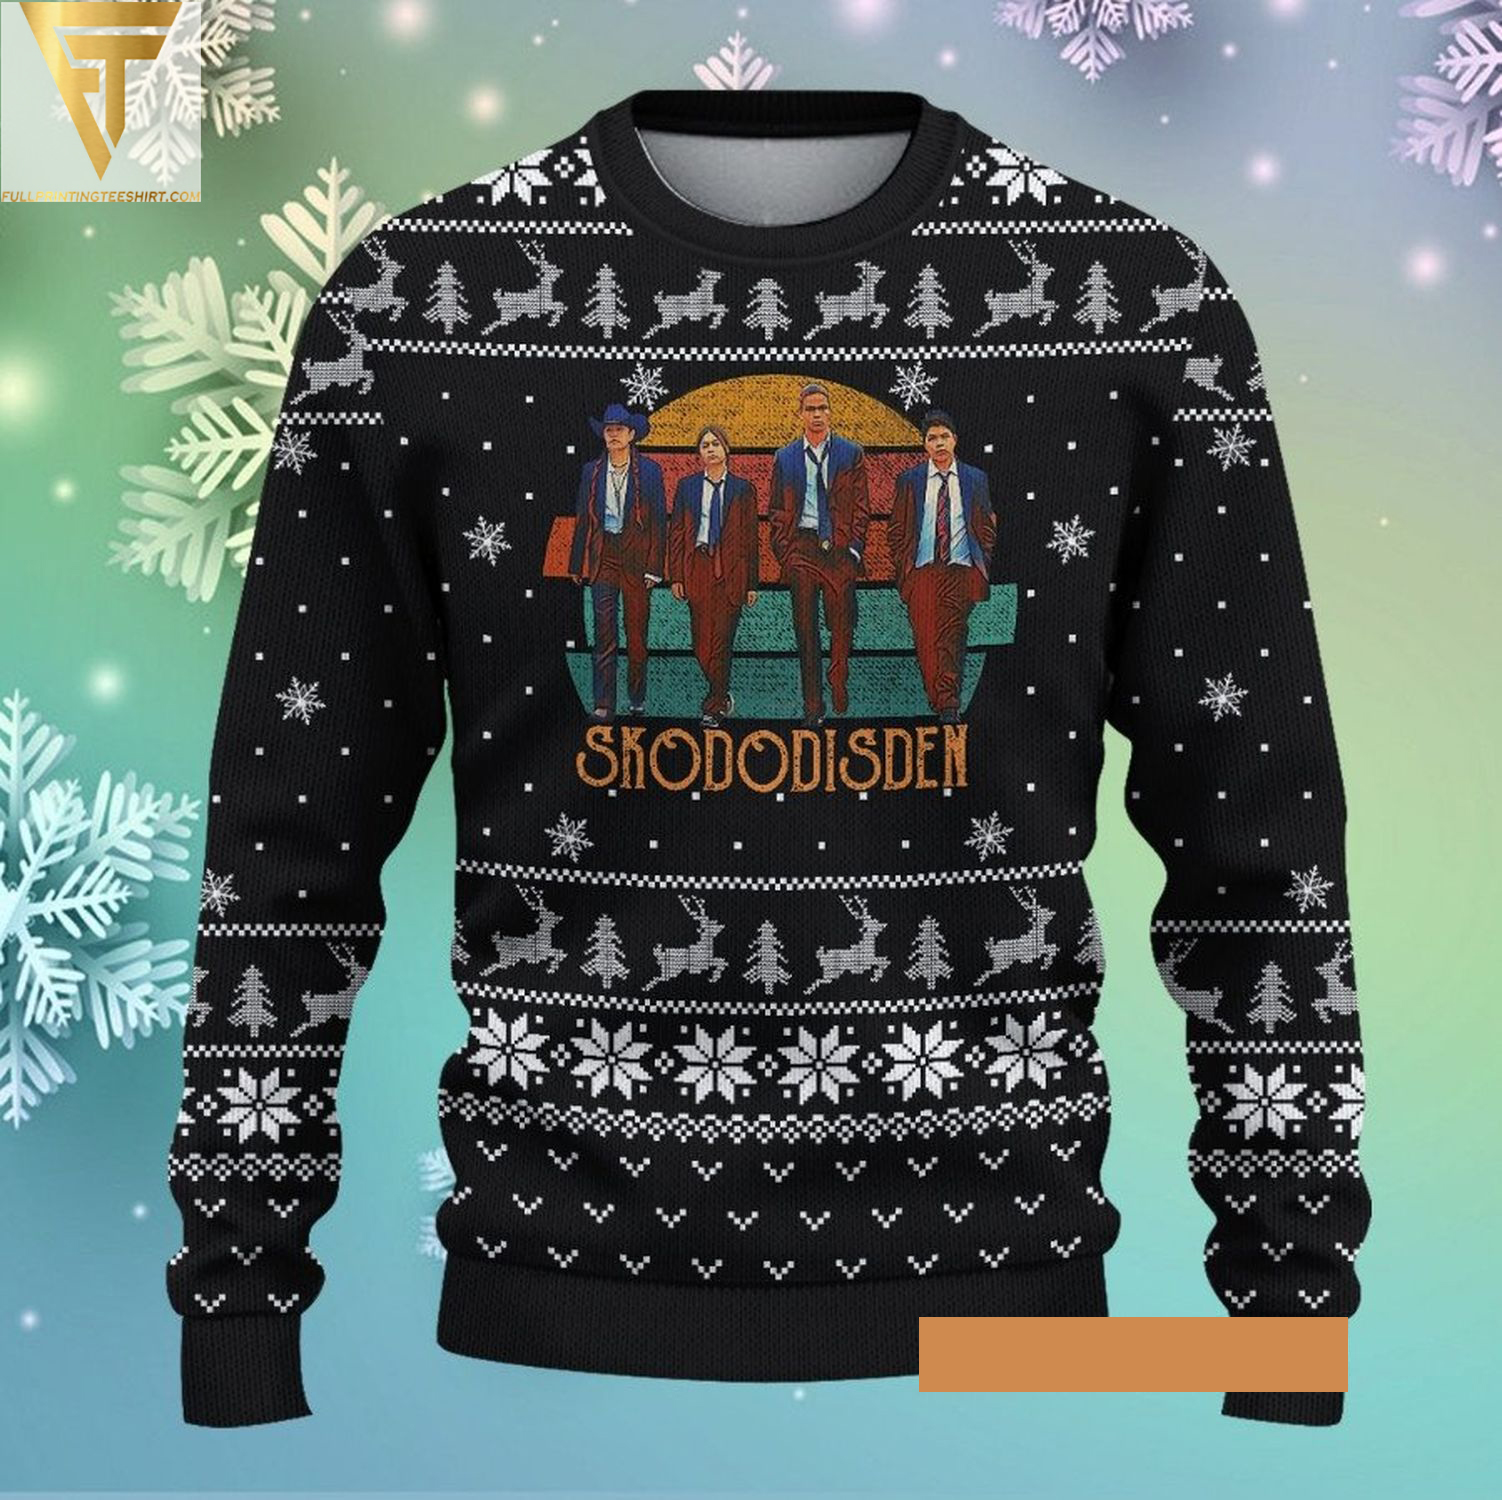 Native american skododisden ugly christmas sweater